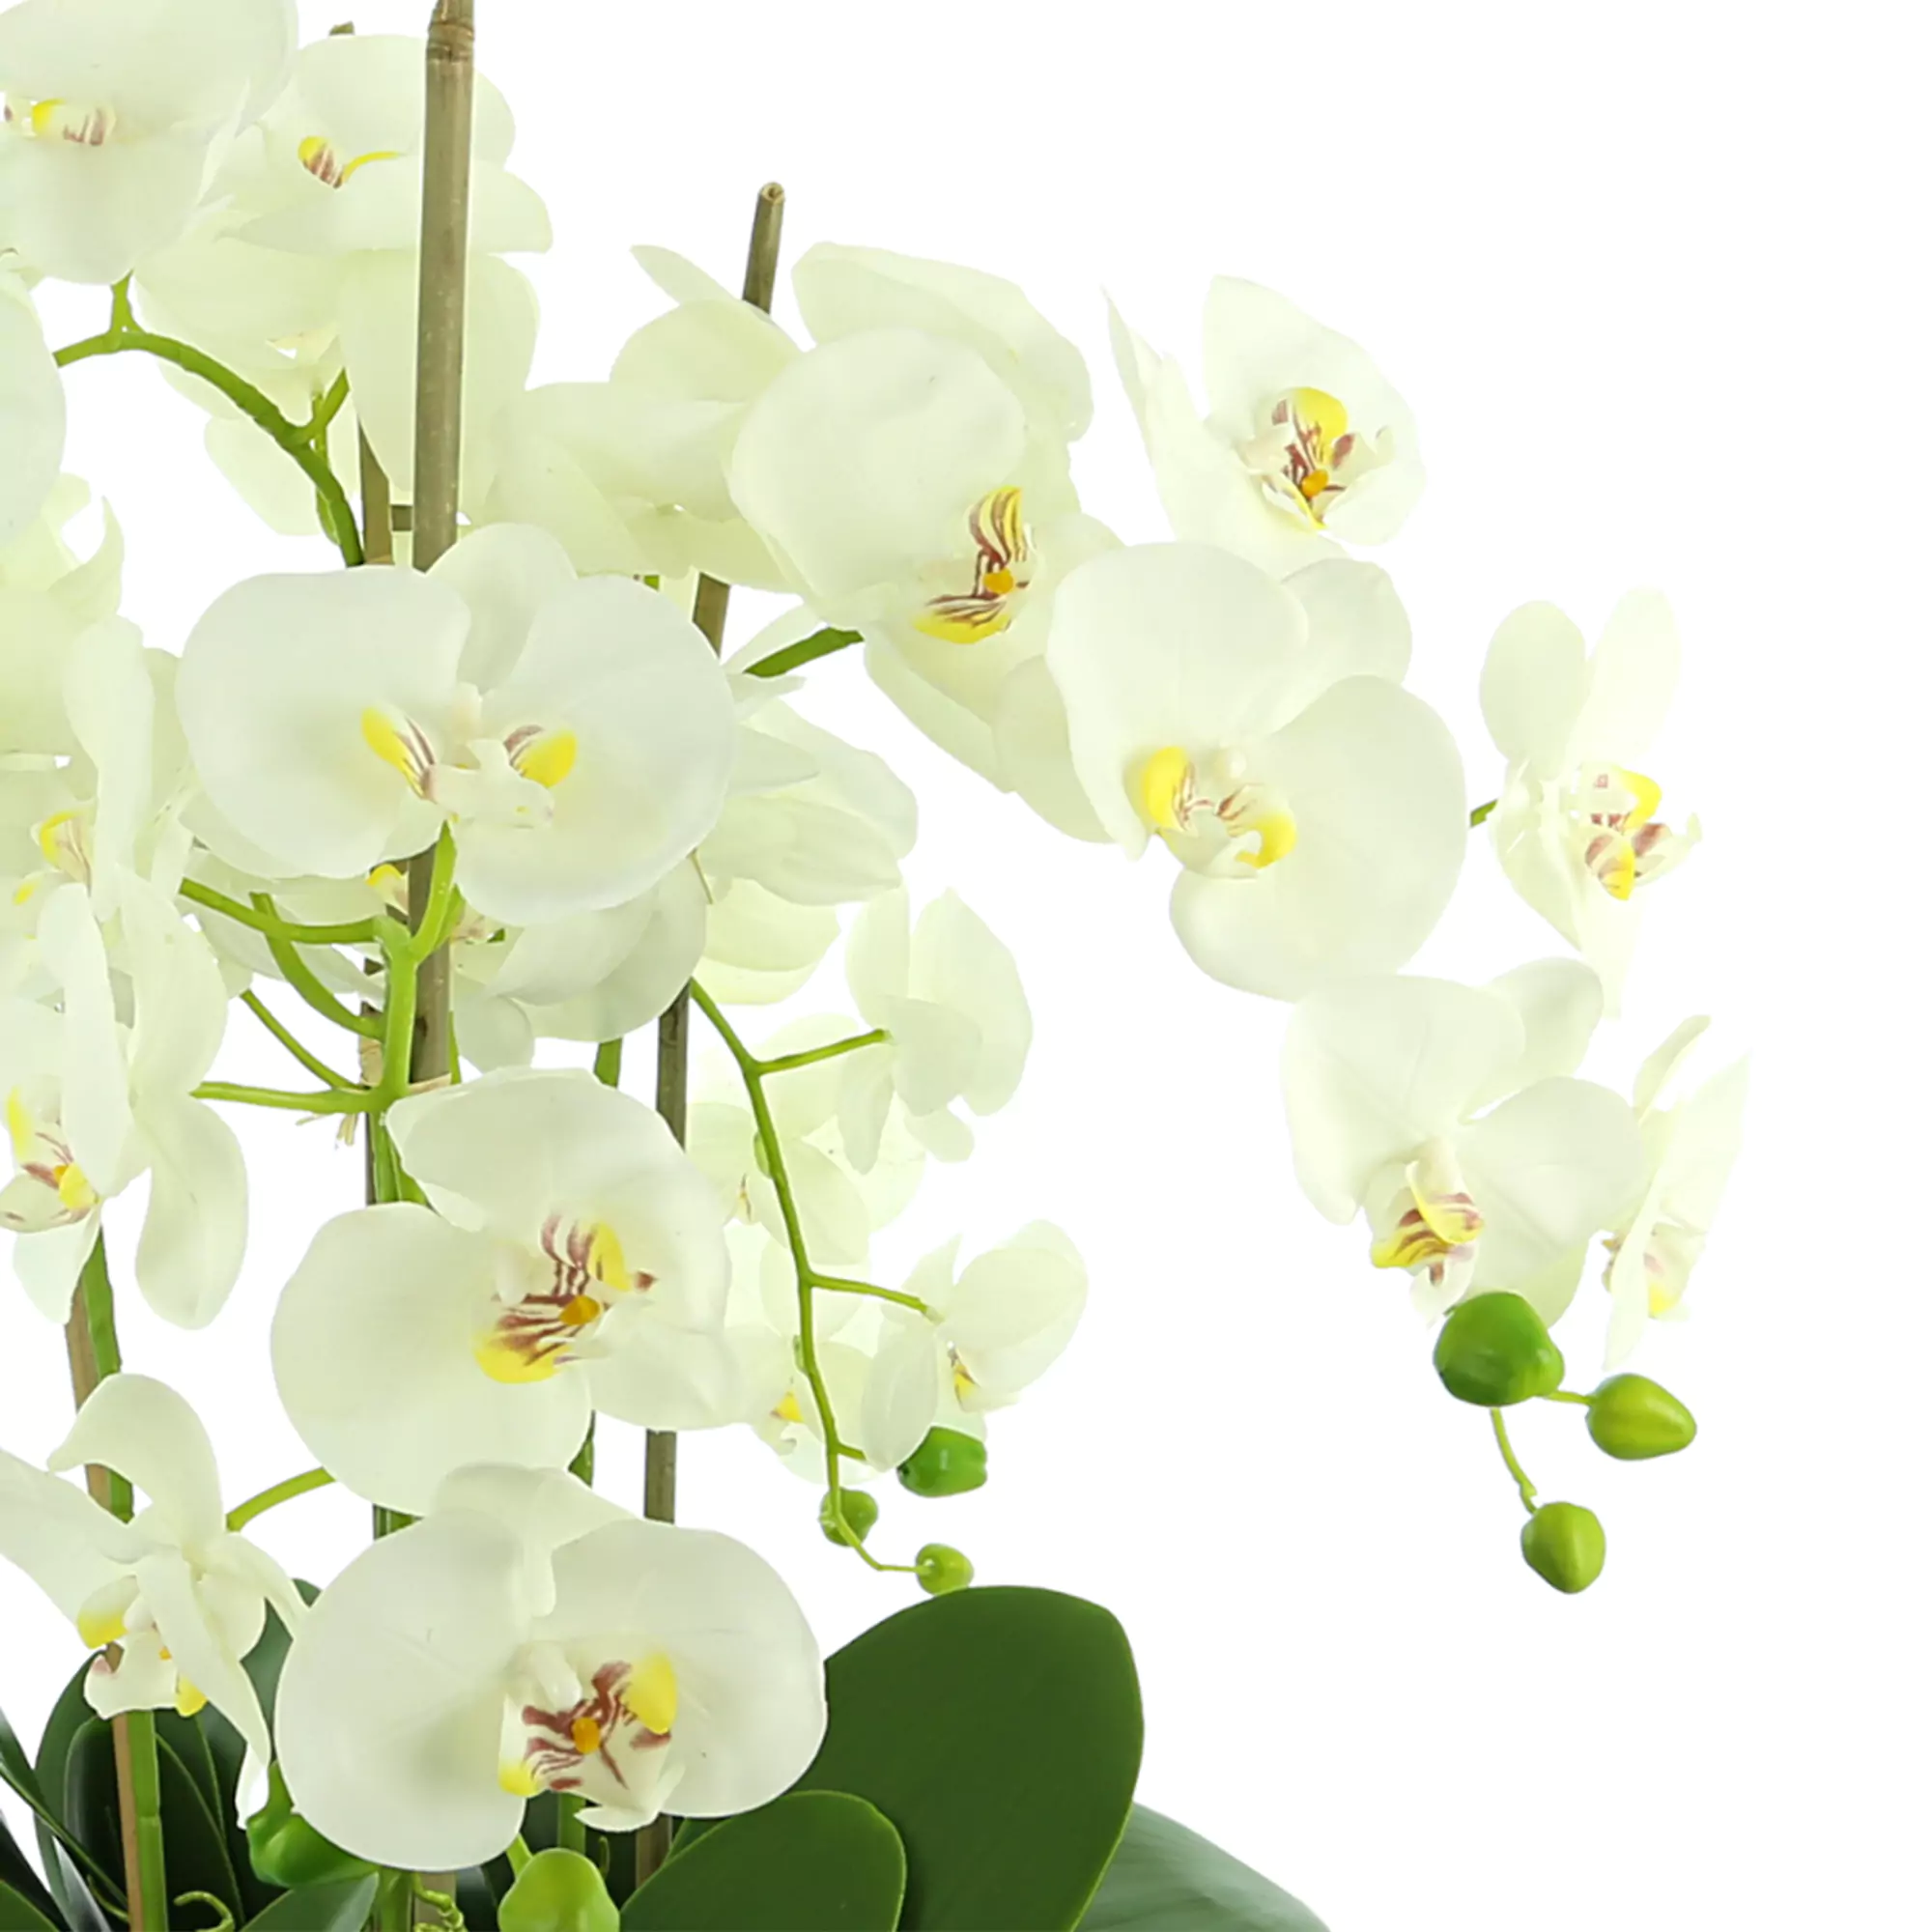 Orchid Floral Arrangement in a Round Fiberstone Planter